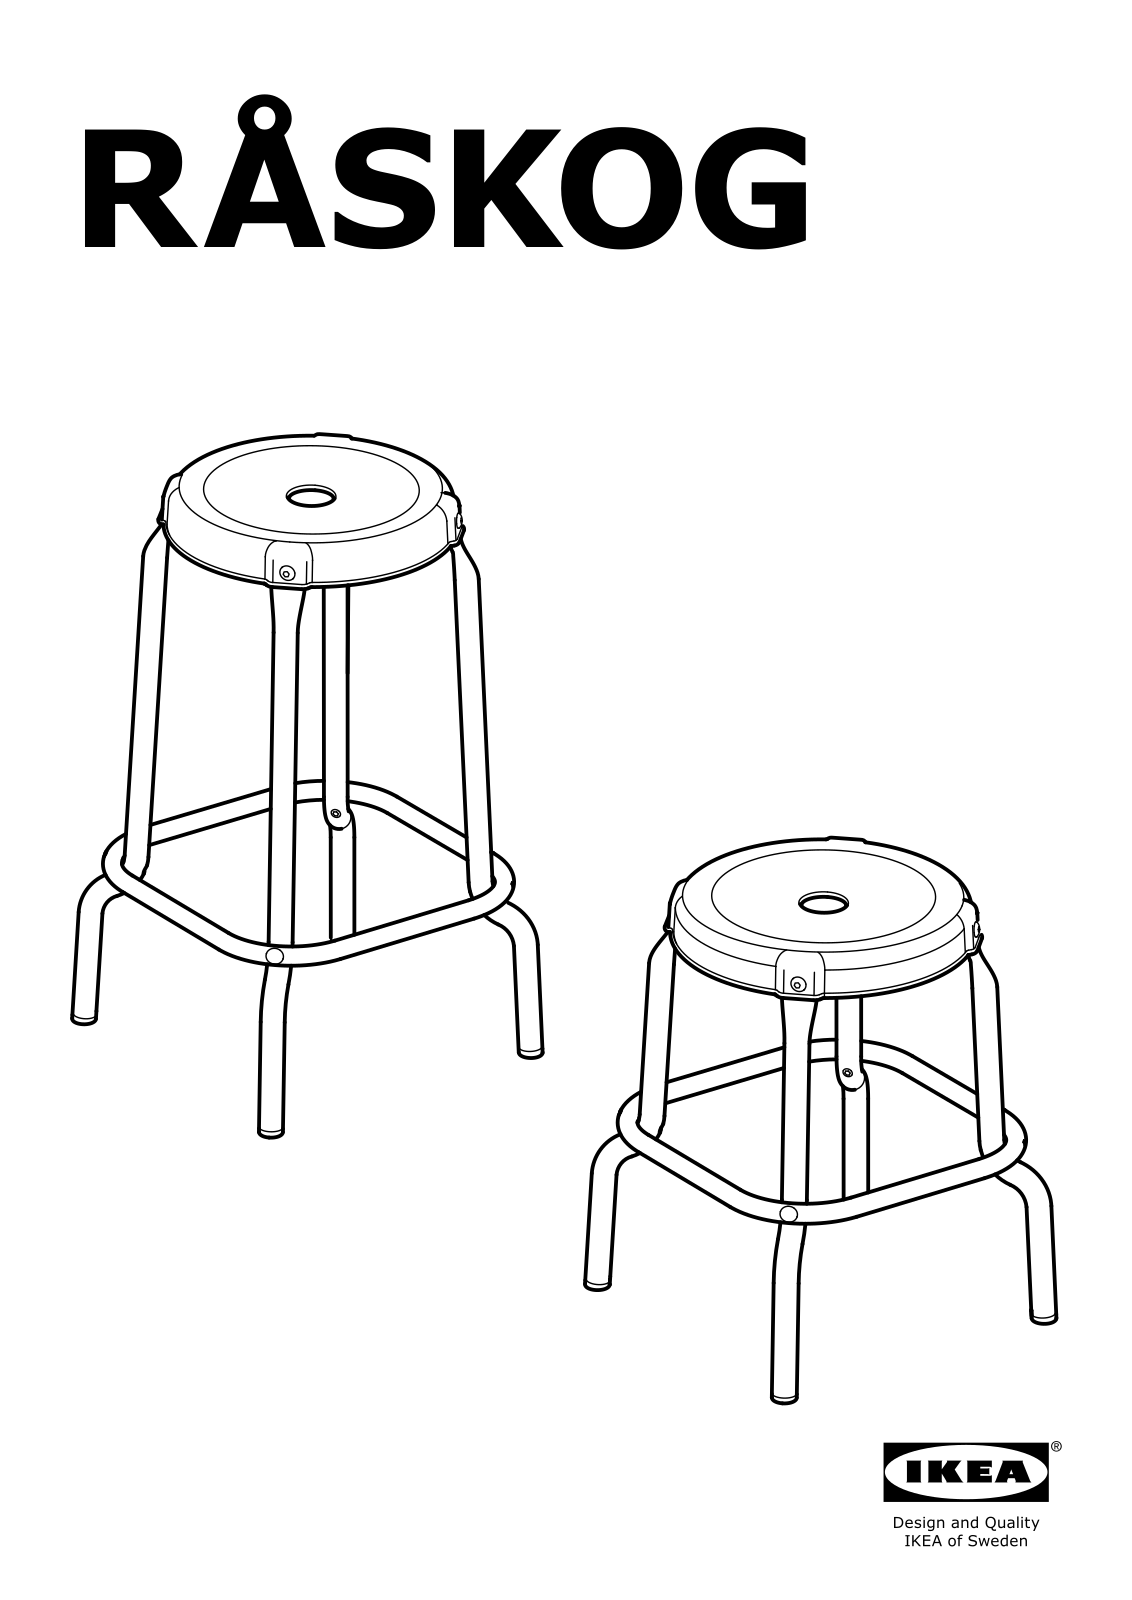 IKEA RASKOG User Manual